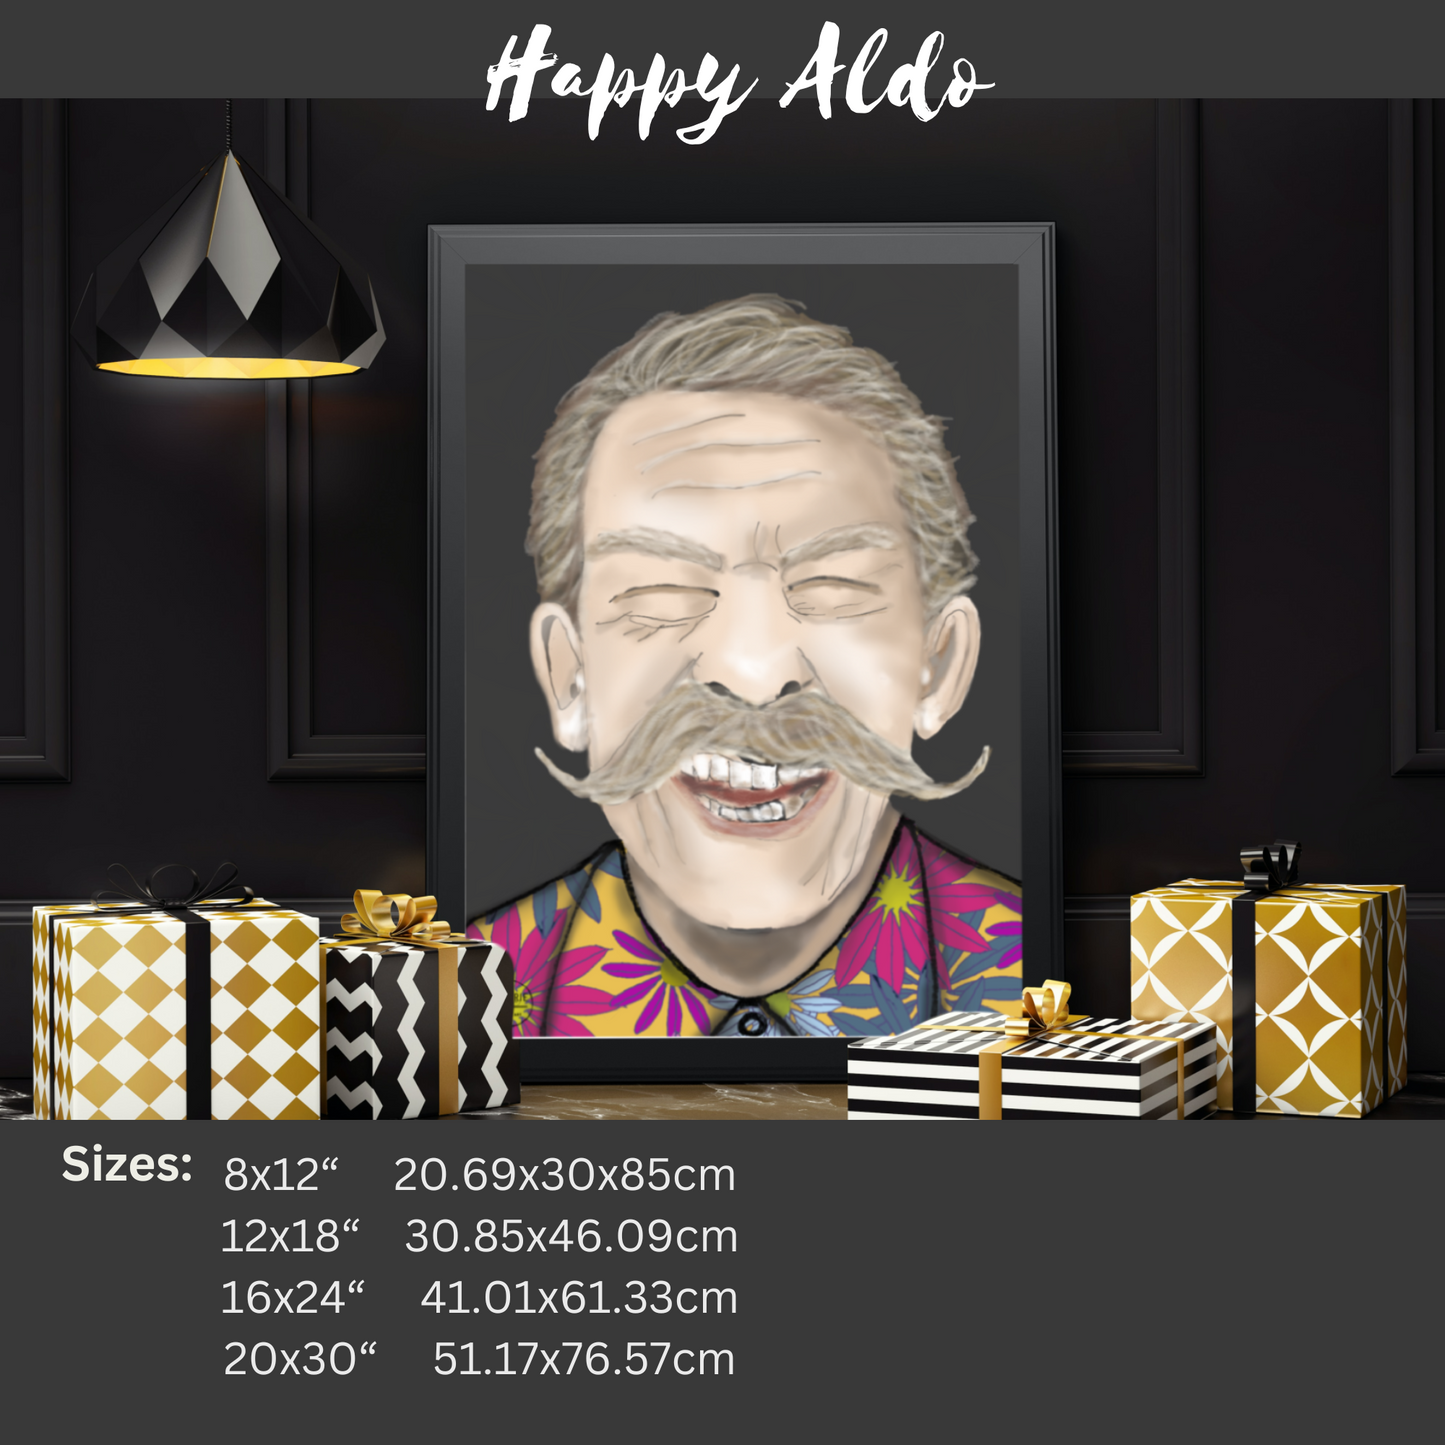 HAPPY ALDO - Canvas print - valerie-digital-art